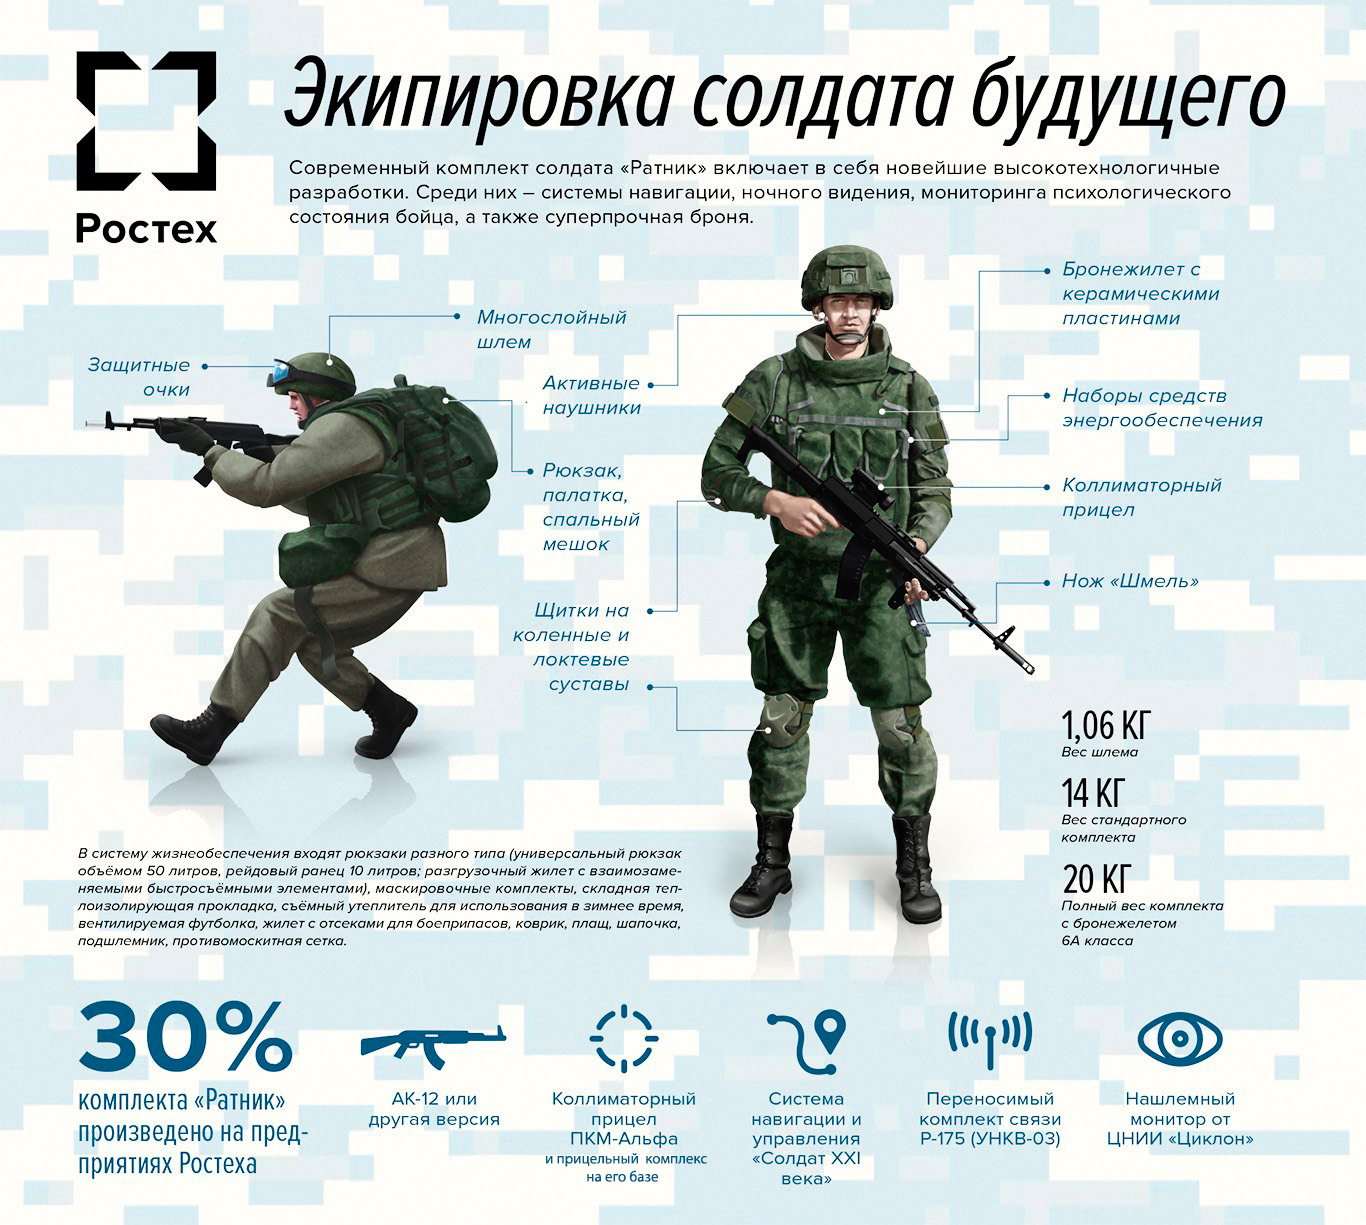 http://rostec.ru/content/images/Ajw-VAQCAig%281%29.jpg